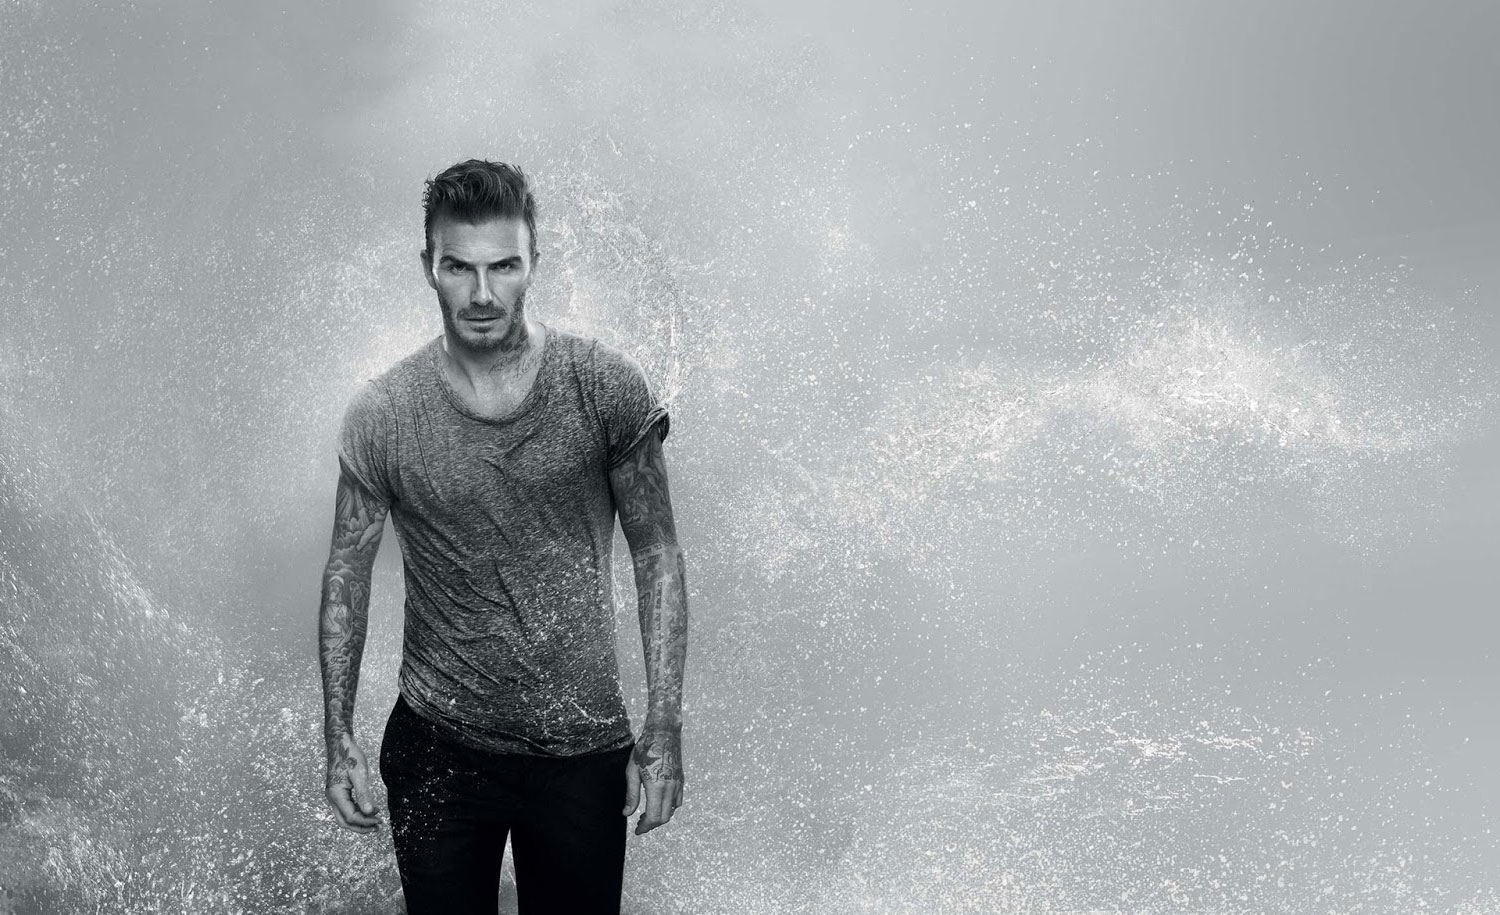 Aquapower + David Beckham